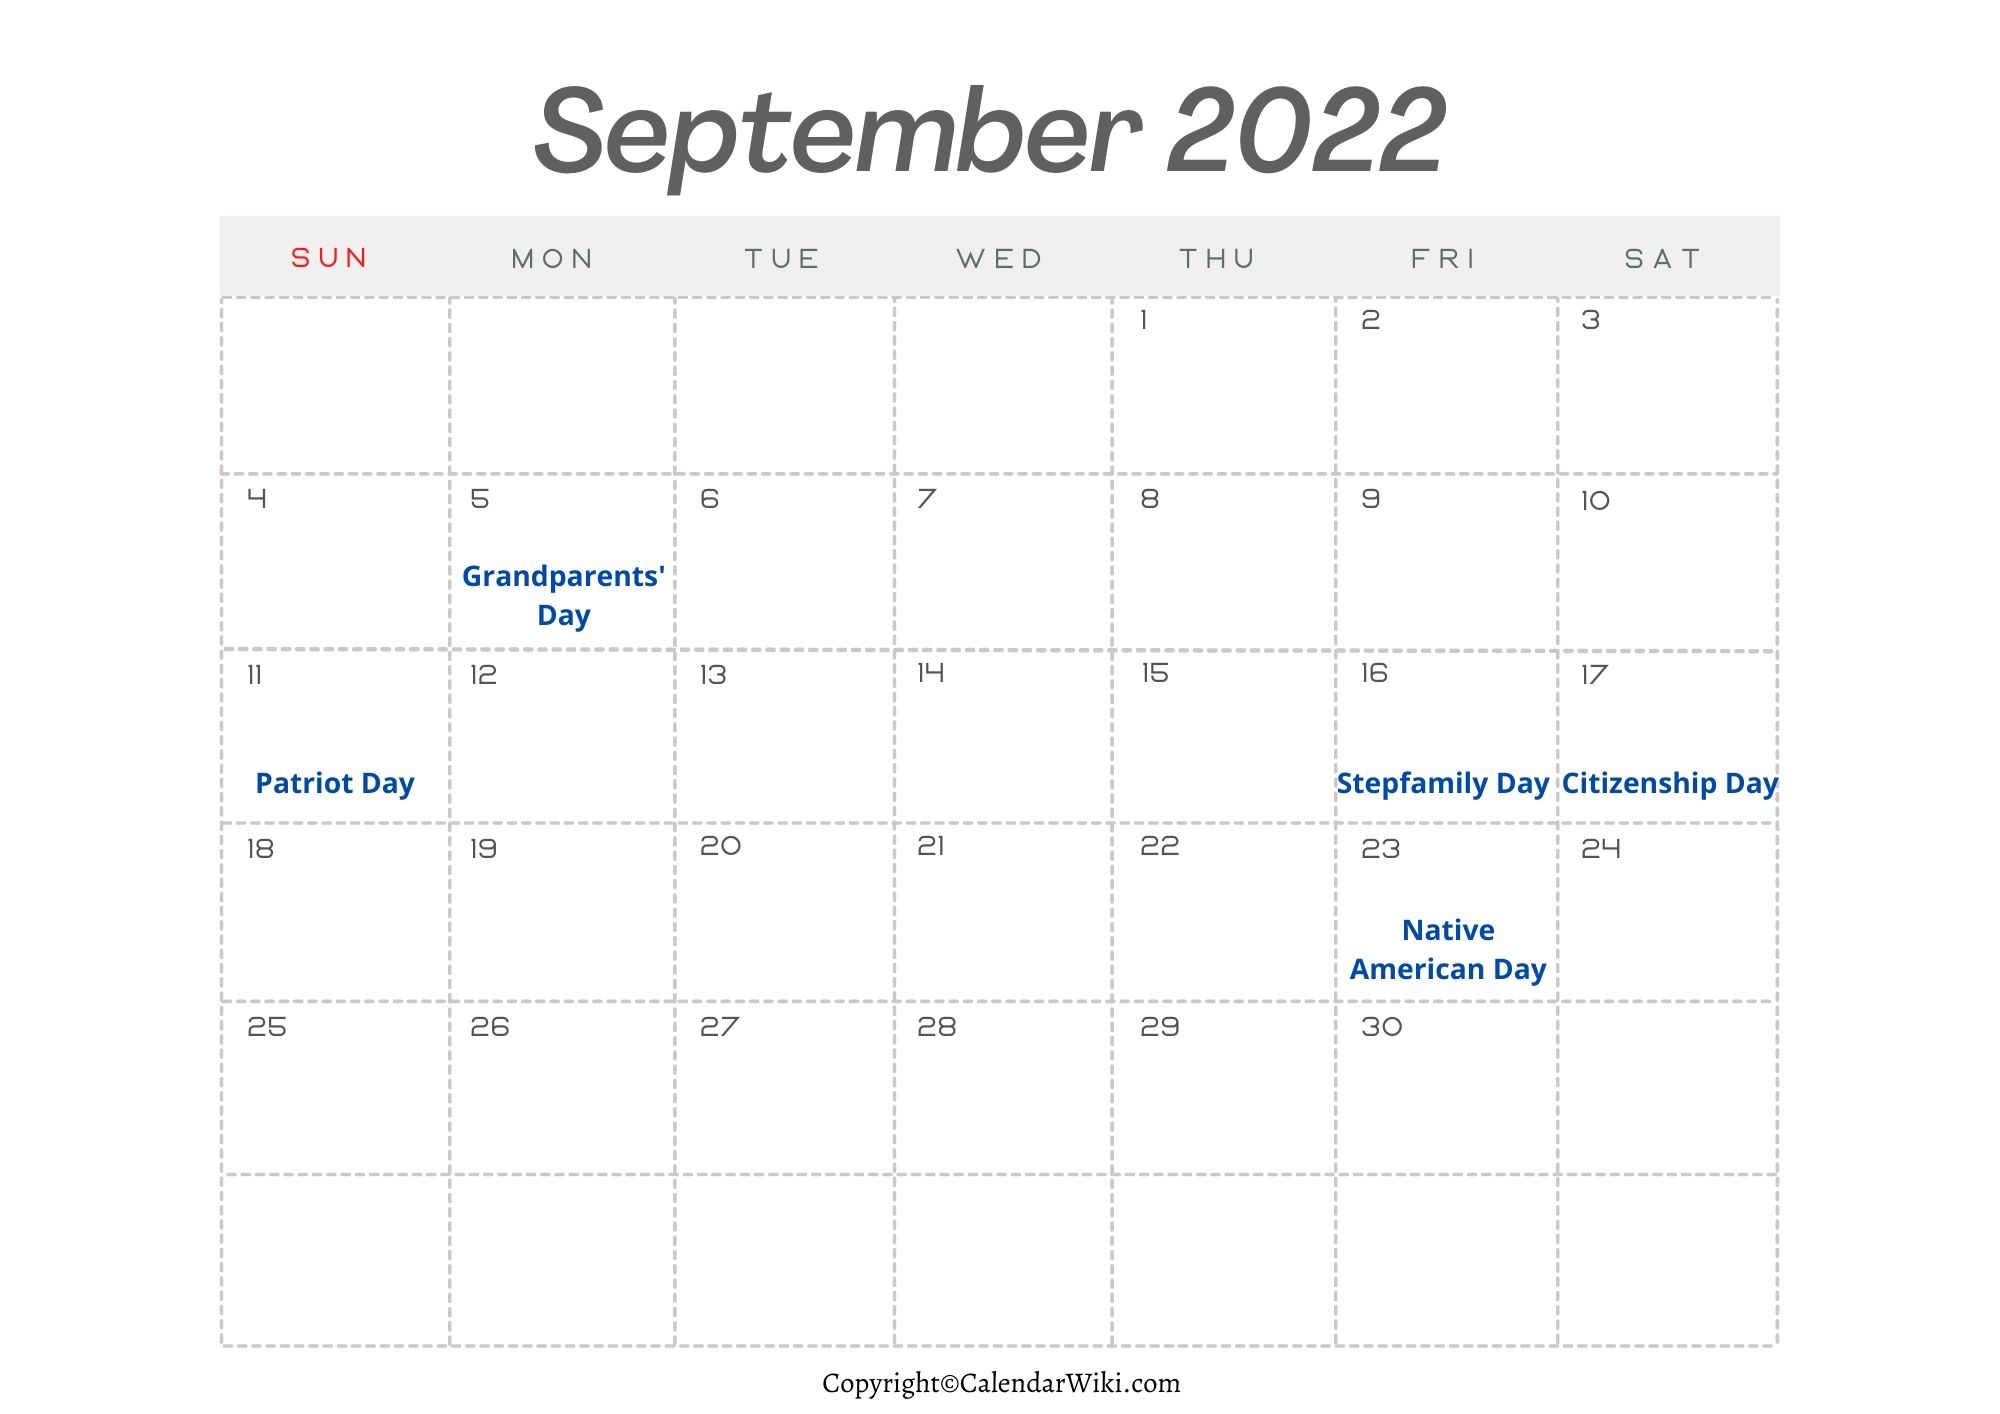 September Holidays 2022